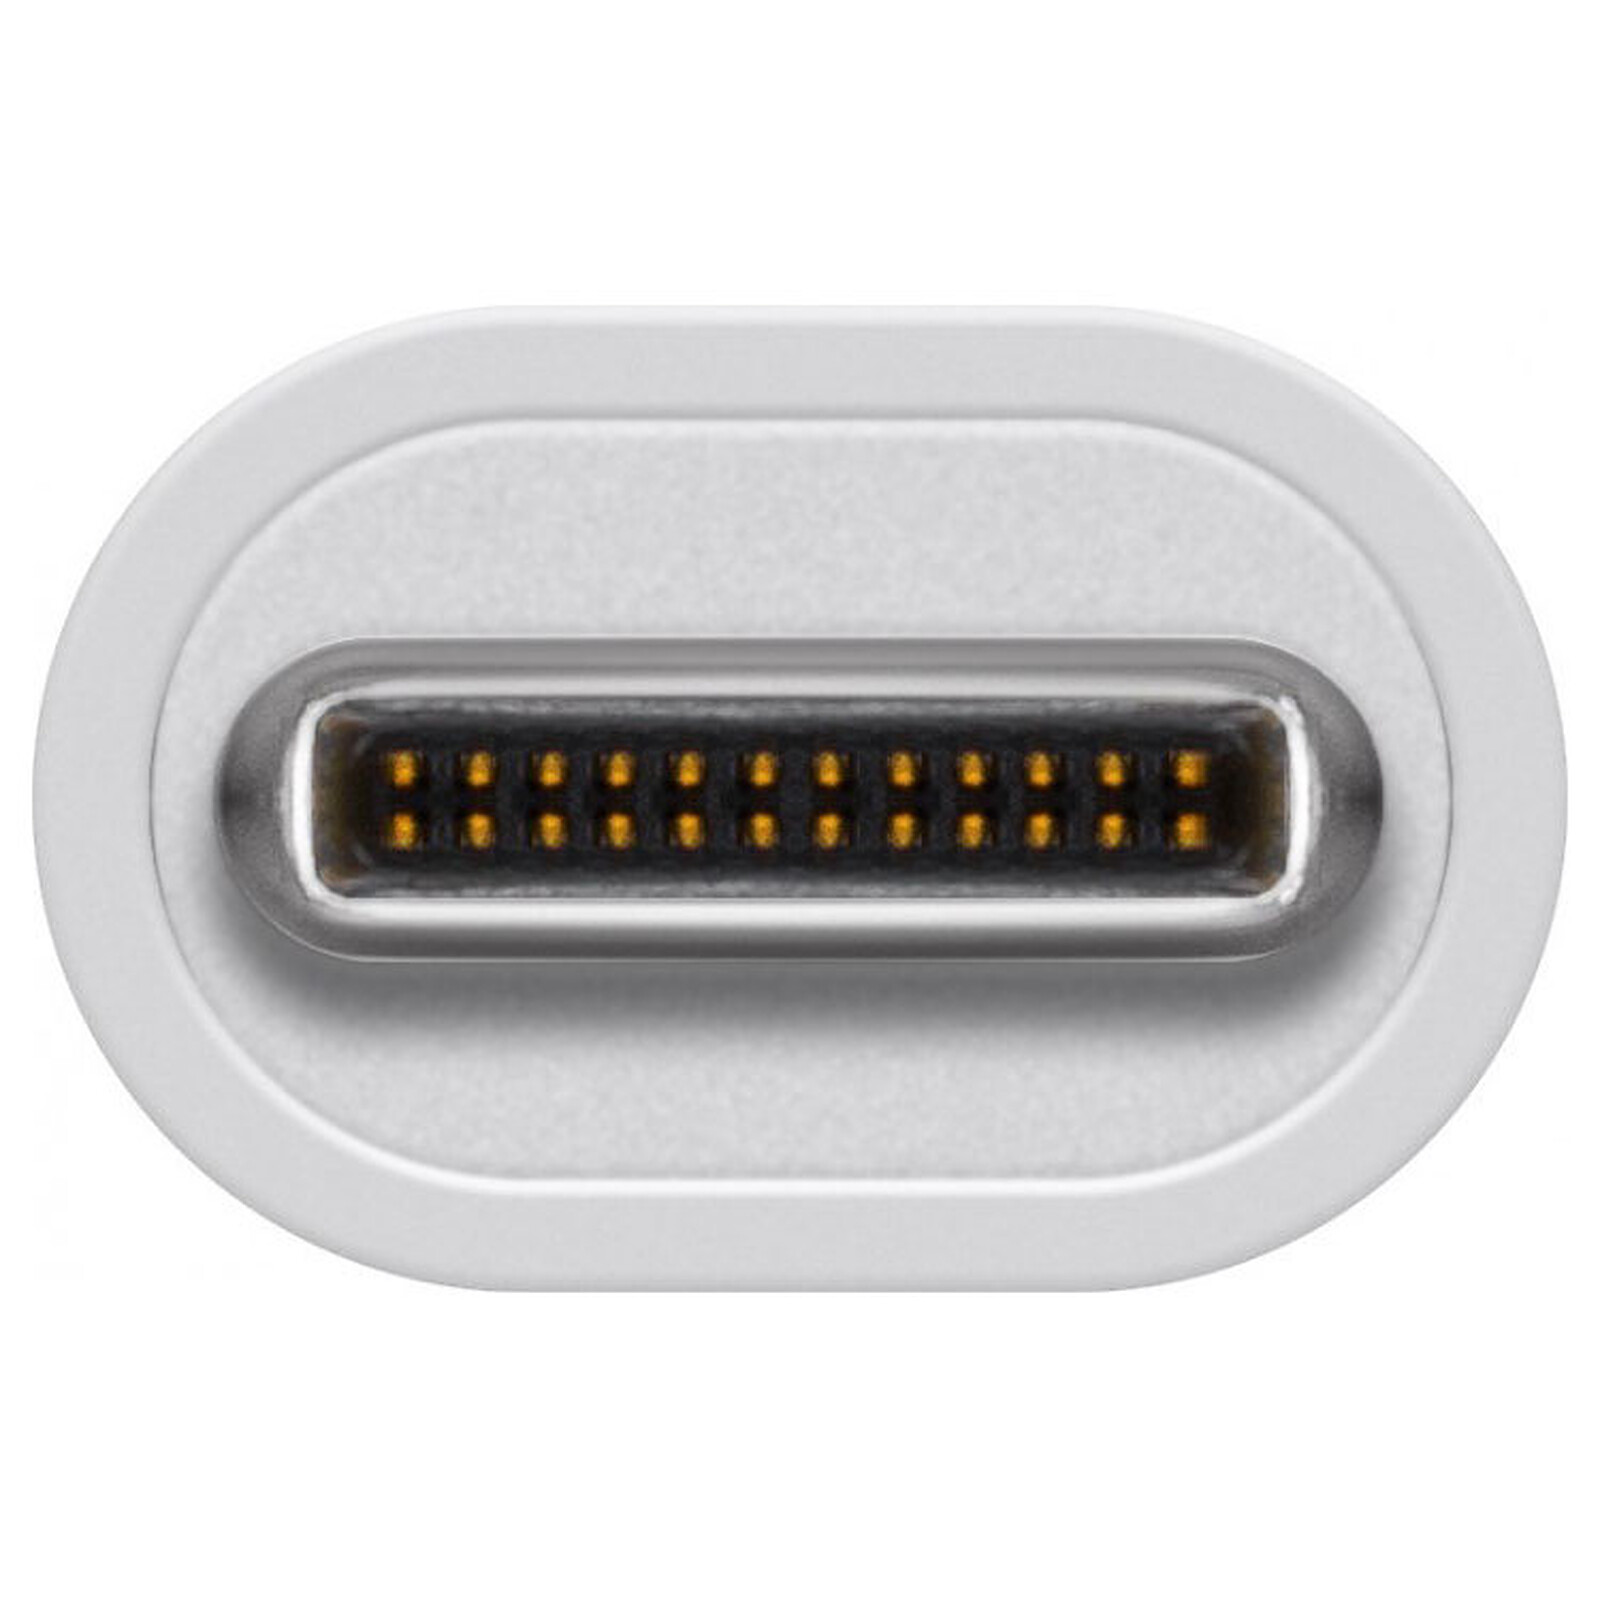 Adaptateur USB 3.1 type C vers DisplayPort - DisplayPort - Garantie 3 ans  LDLC